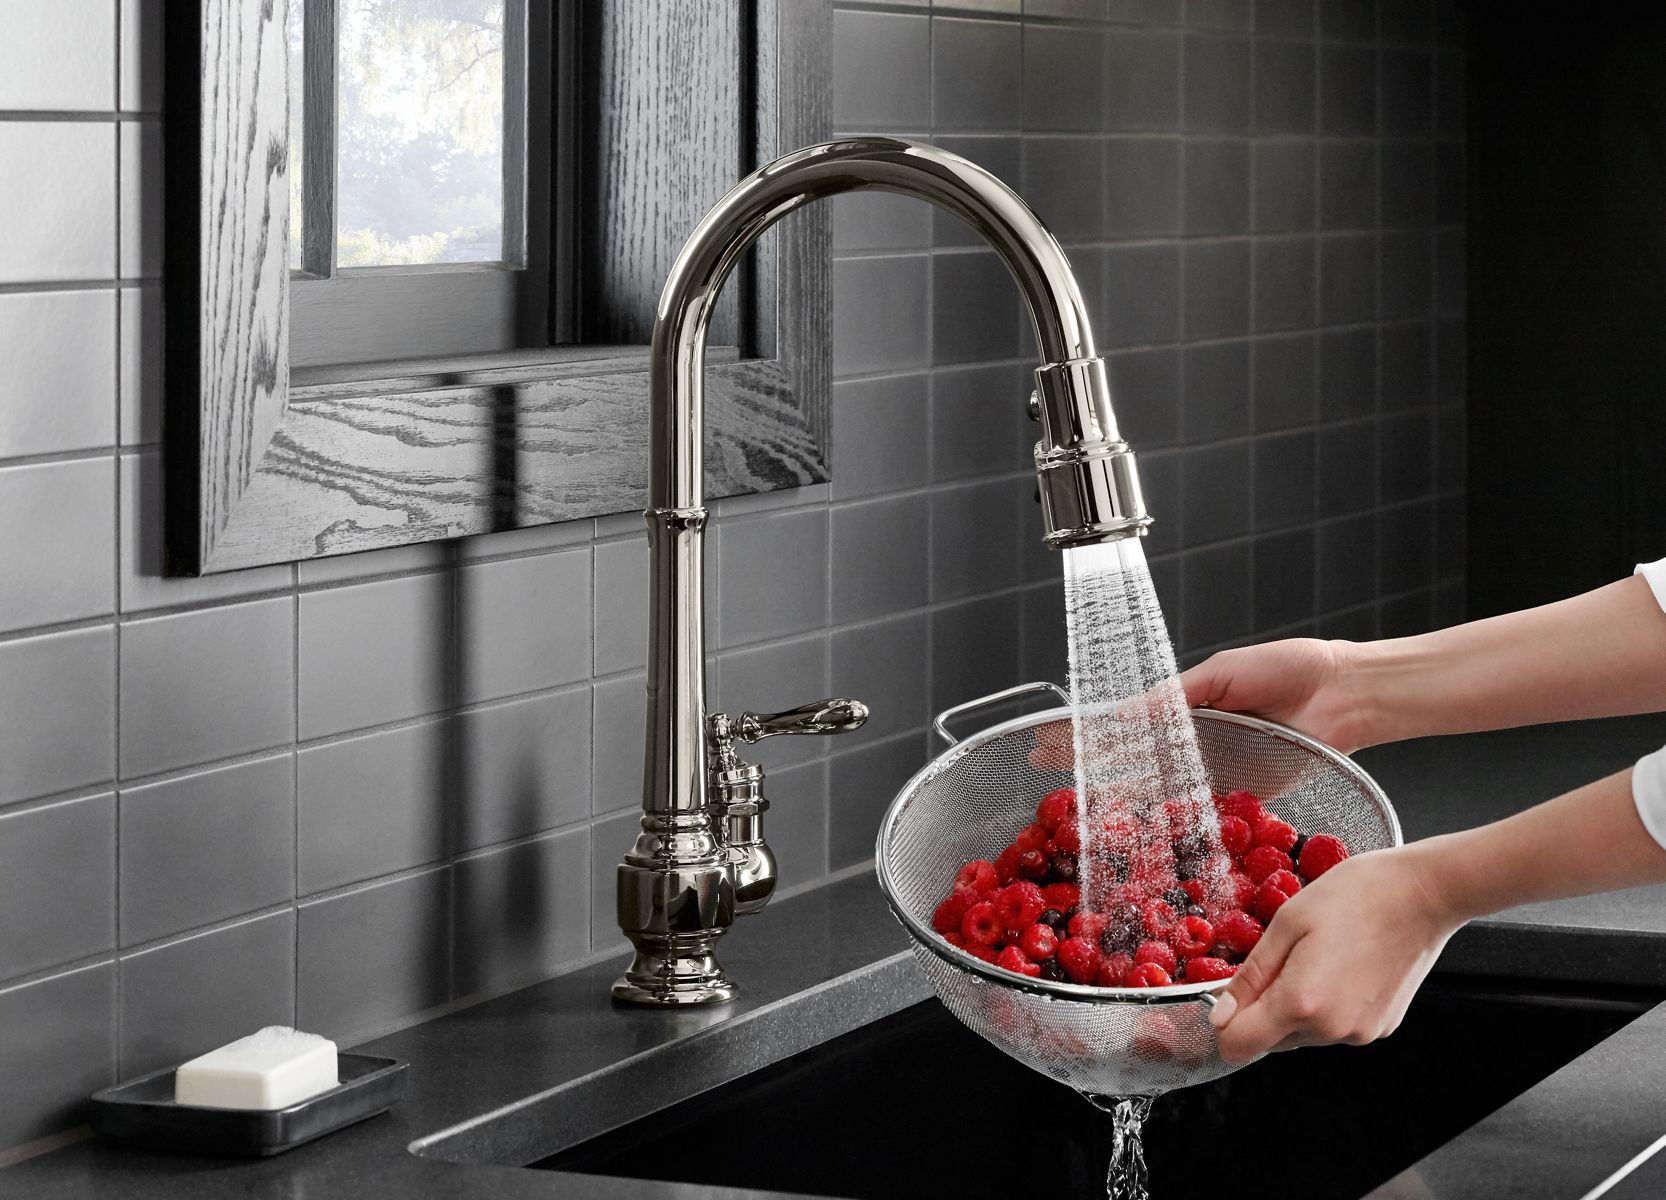 Choose your faucet function